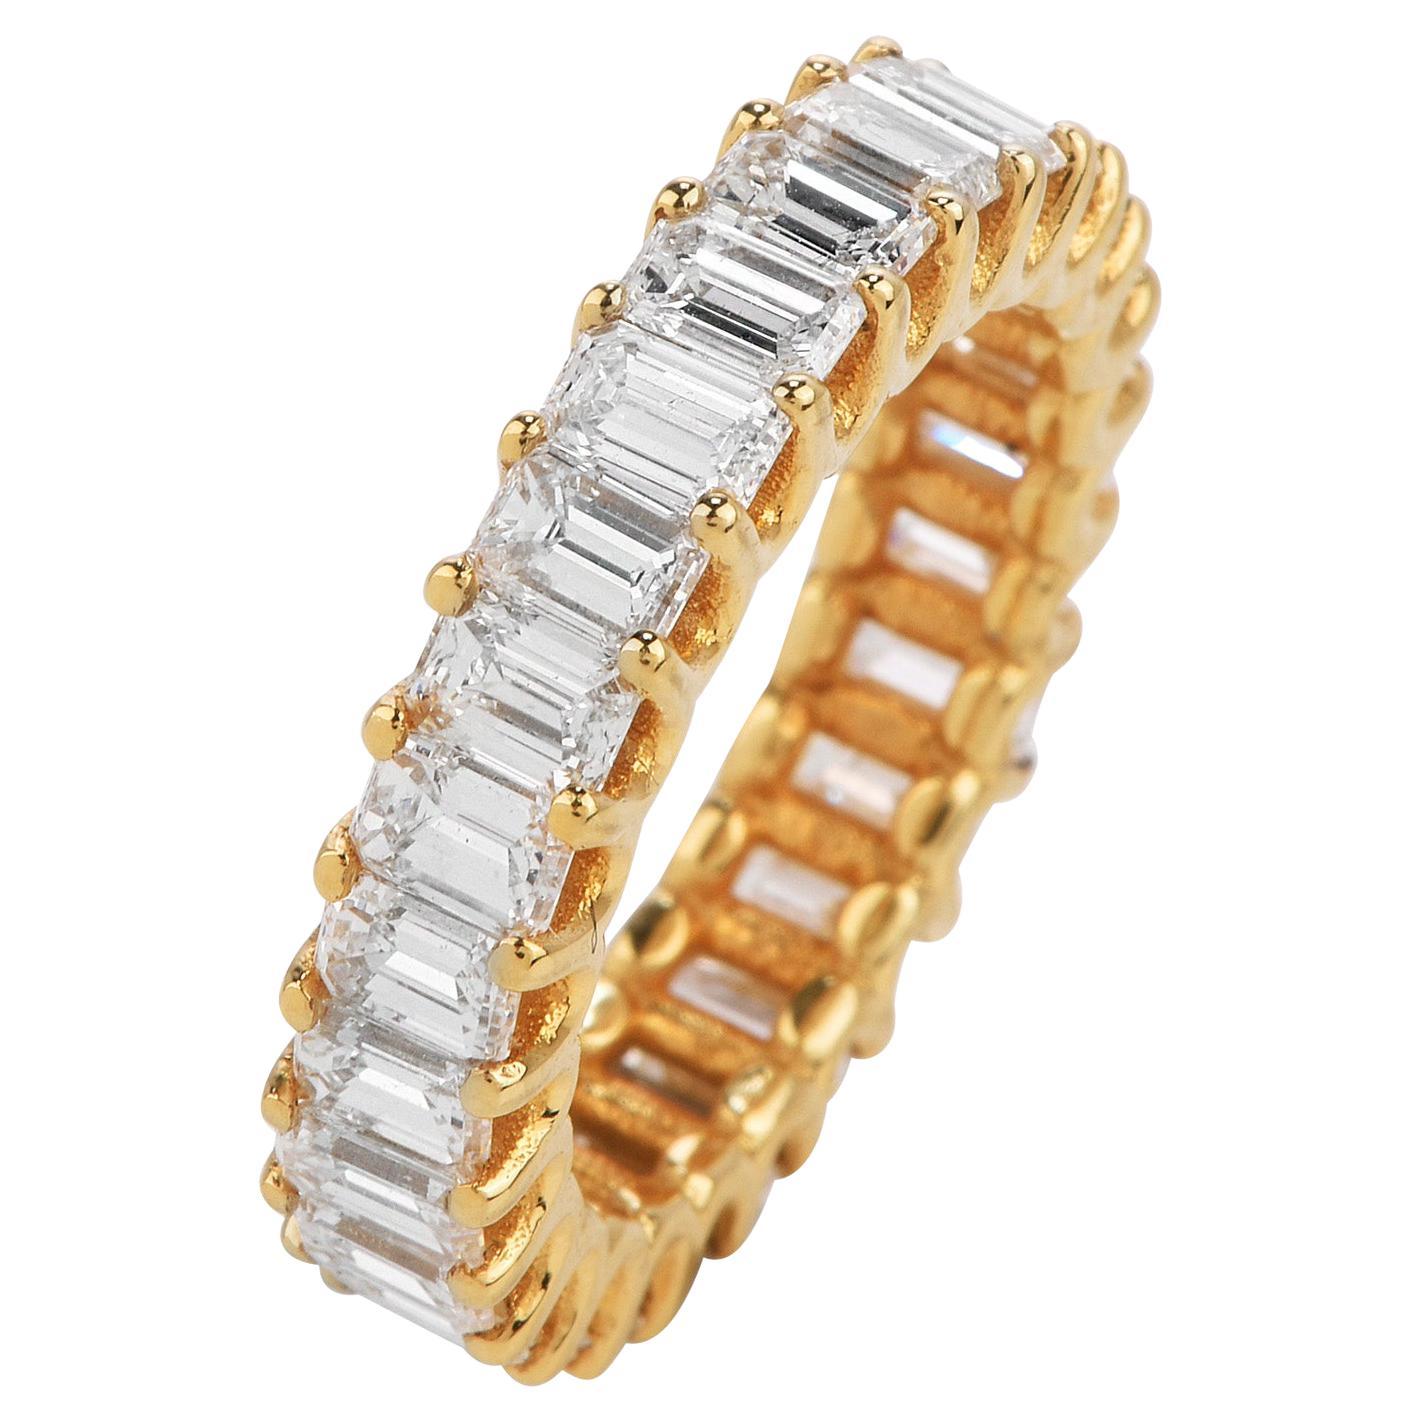 3.82 Carat Baguette Cut Diamond Yellow Gold Eternity Band Ring